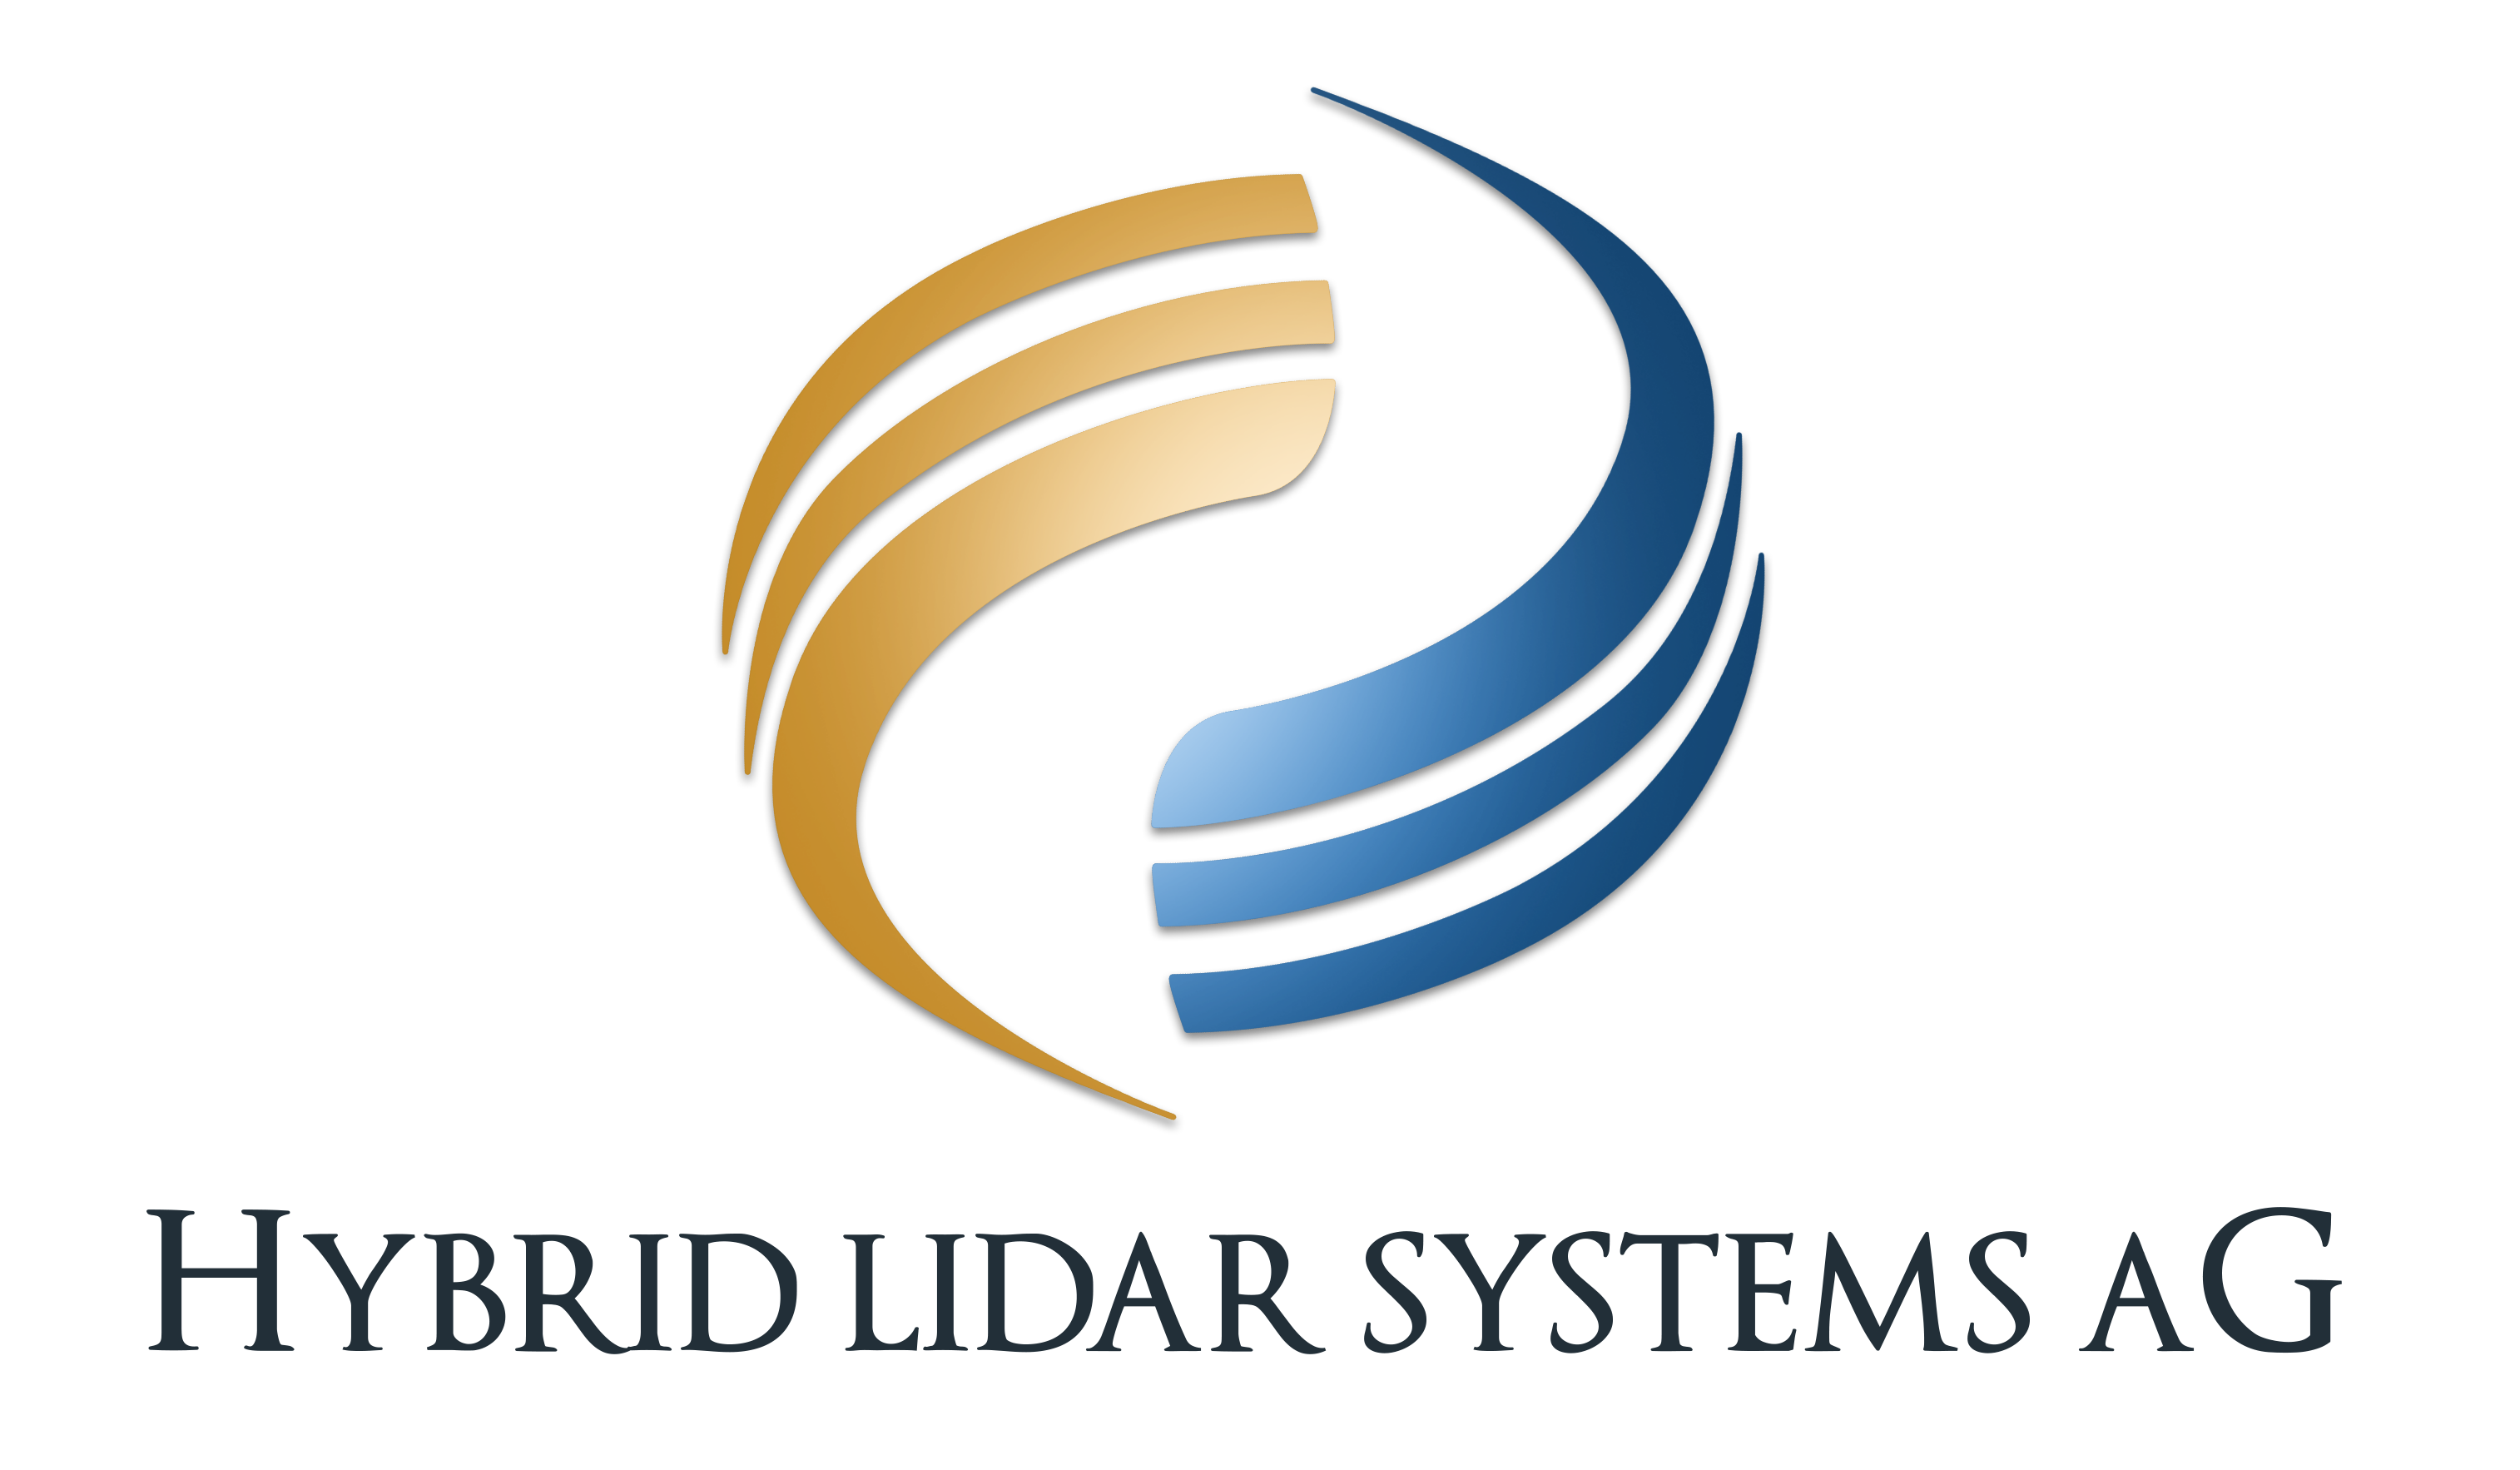 Hybrid LIDAR Systems